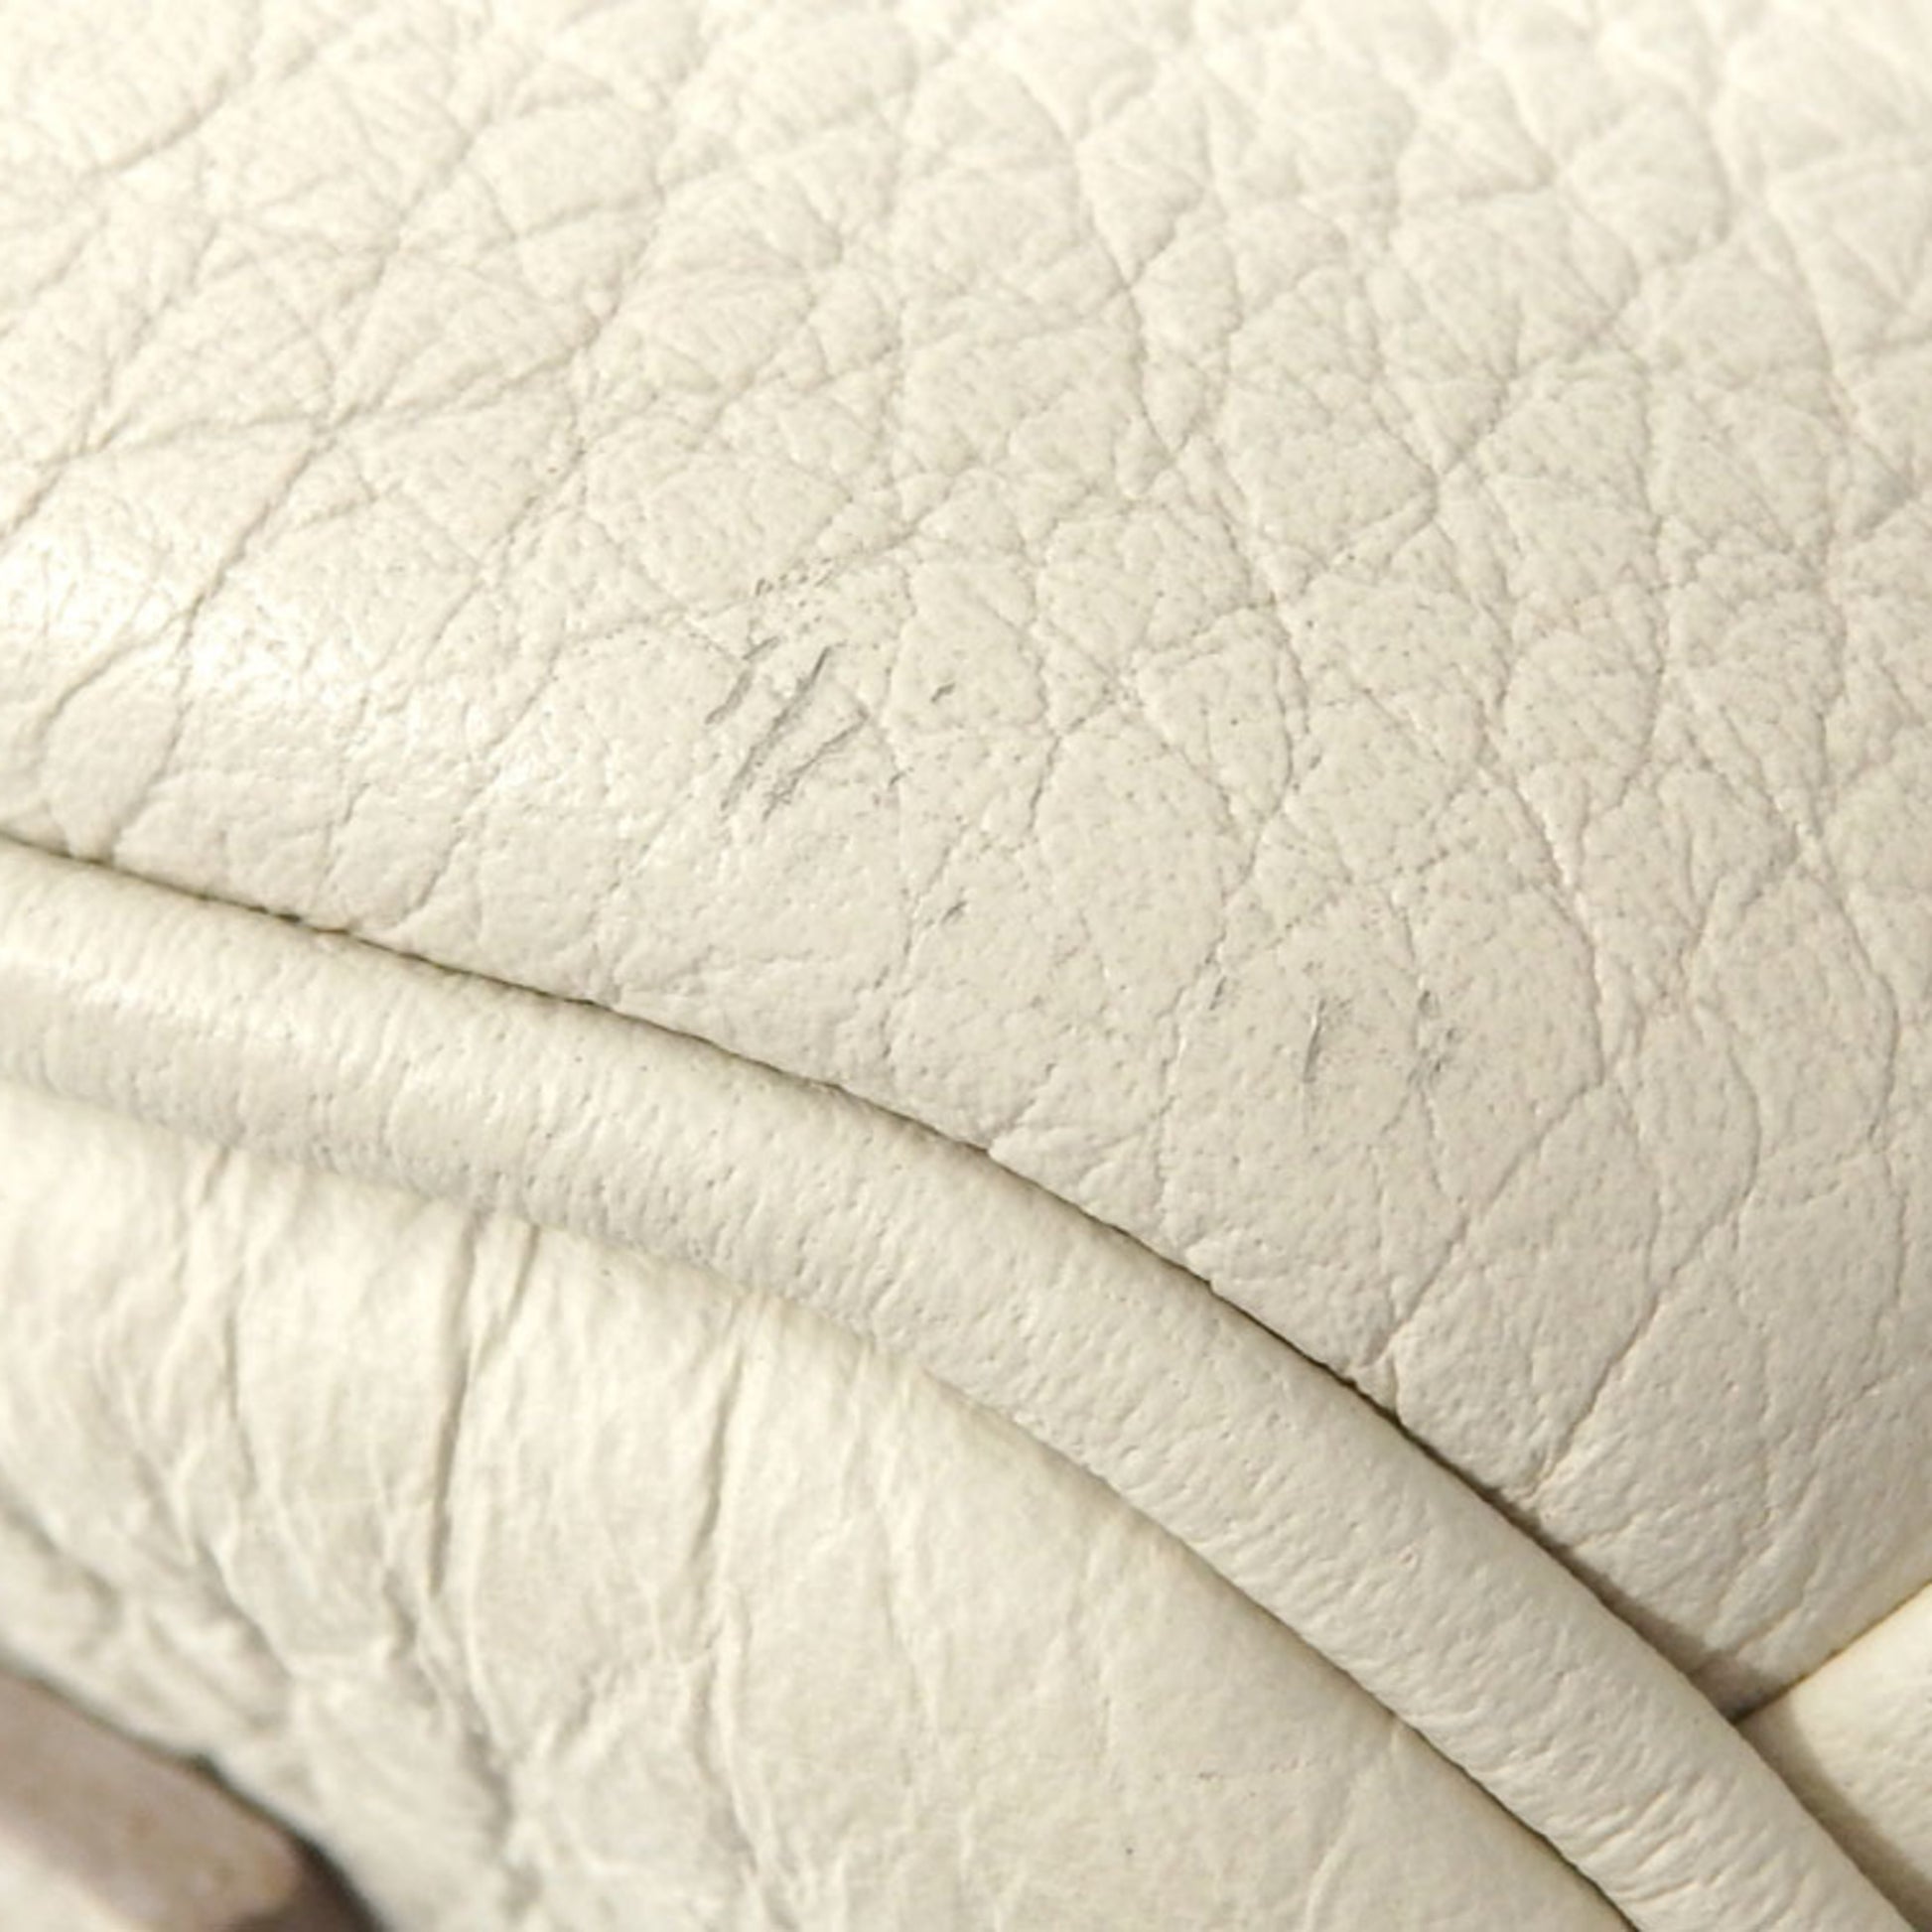 Birkin 25 leather handbag Hermès Pink in Leather - 37189600